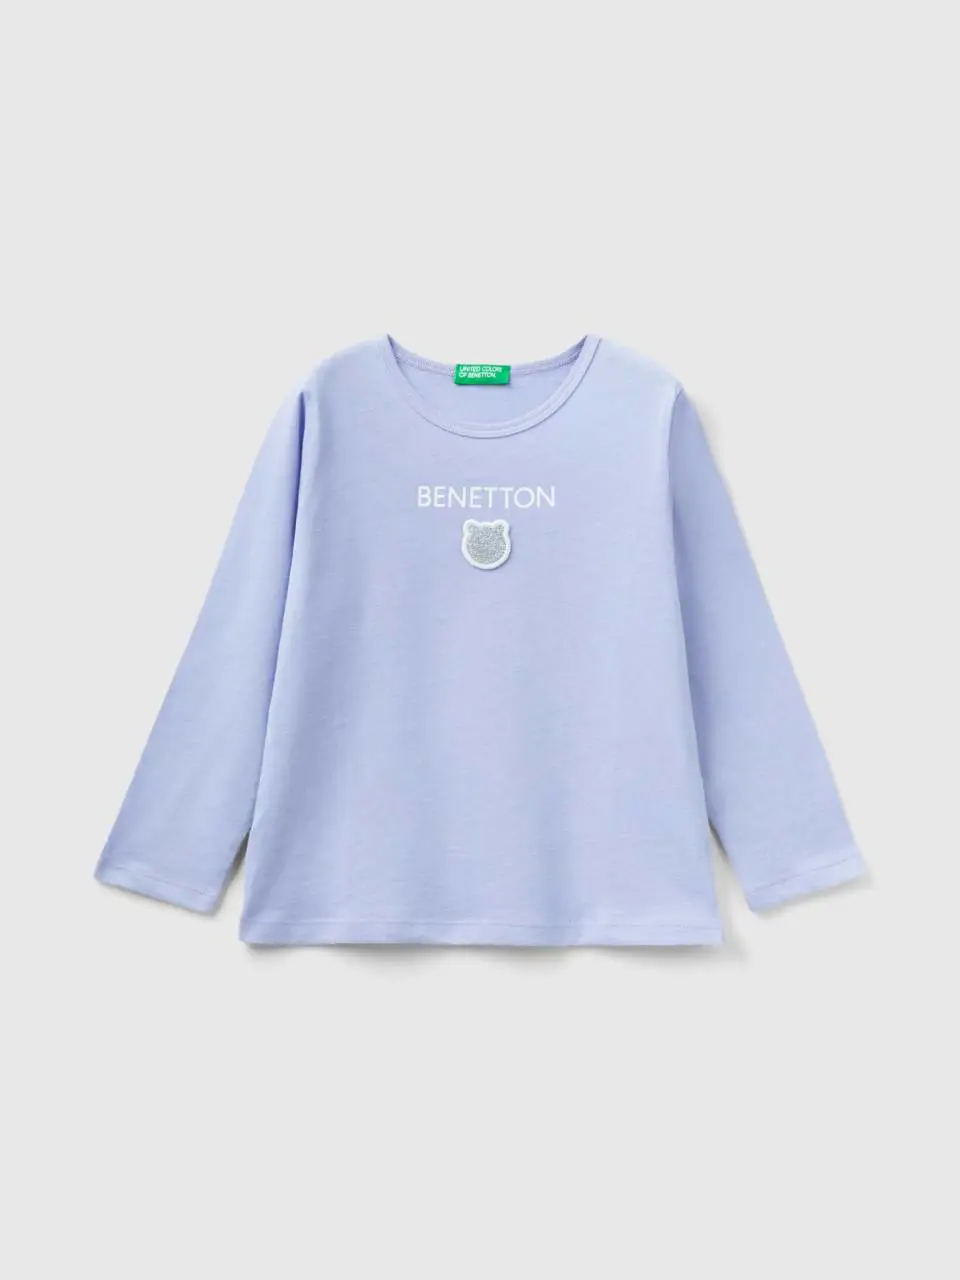 Benetton organic cotton t-shirt with glittery print. 1